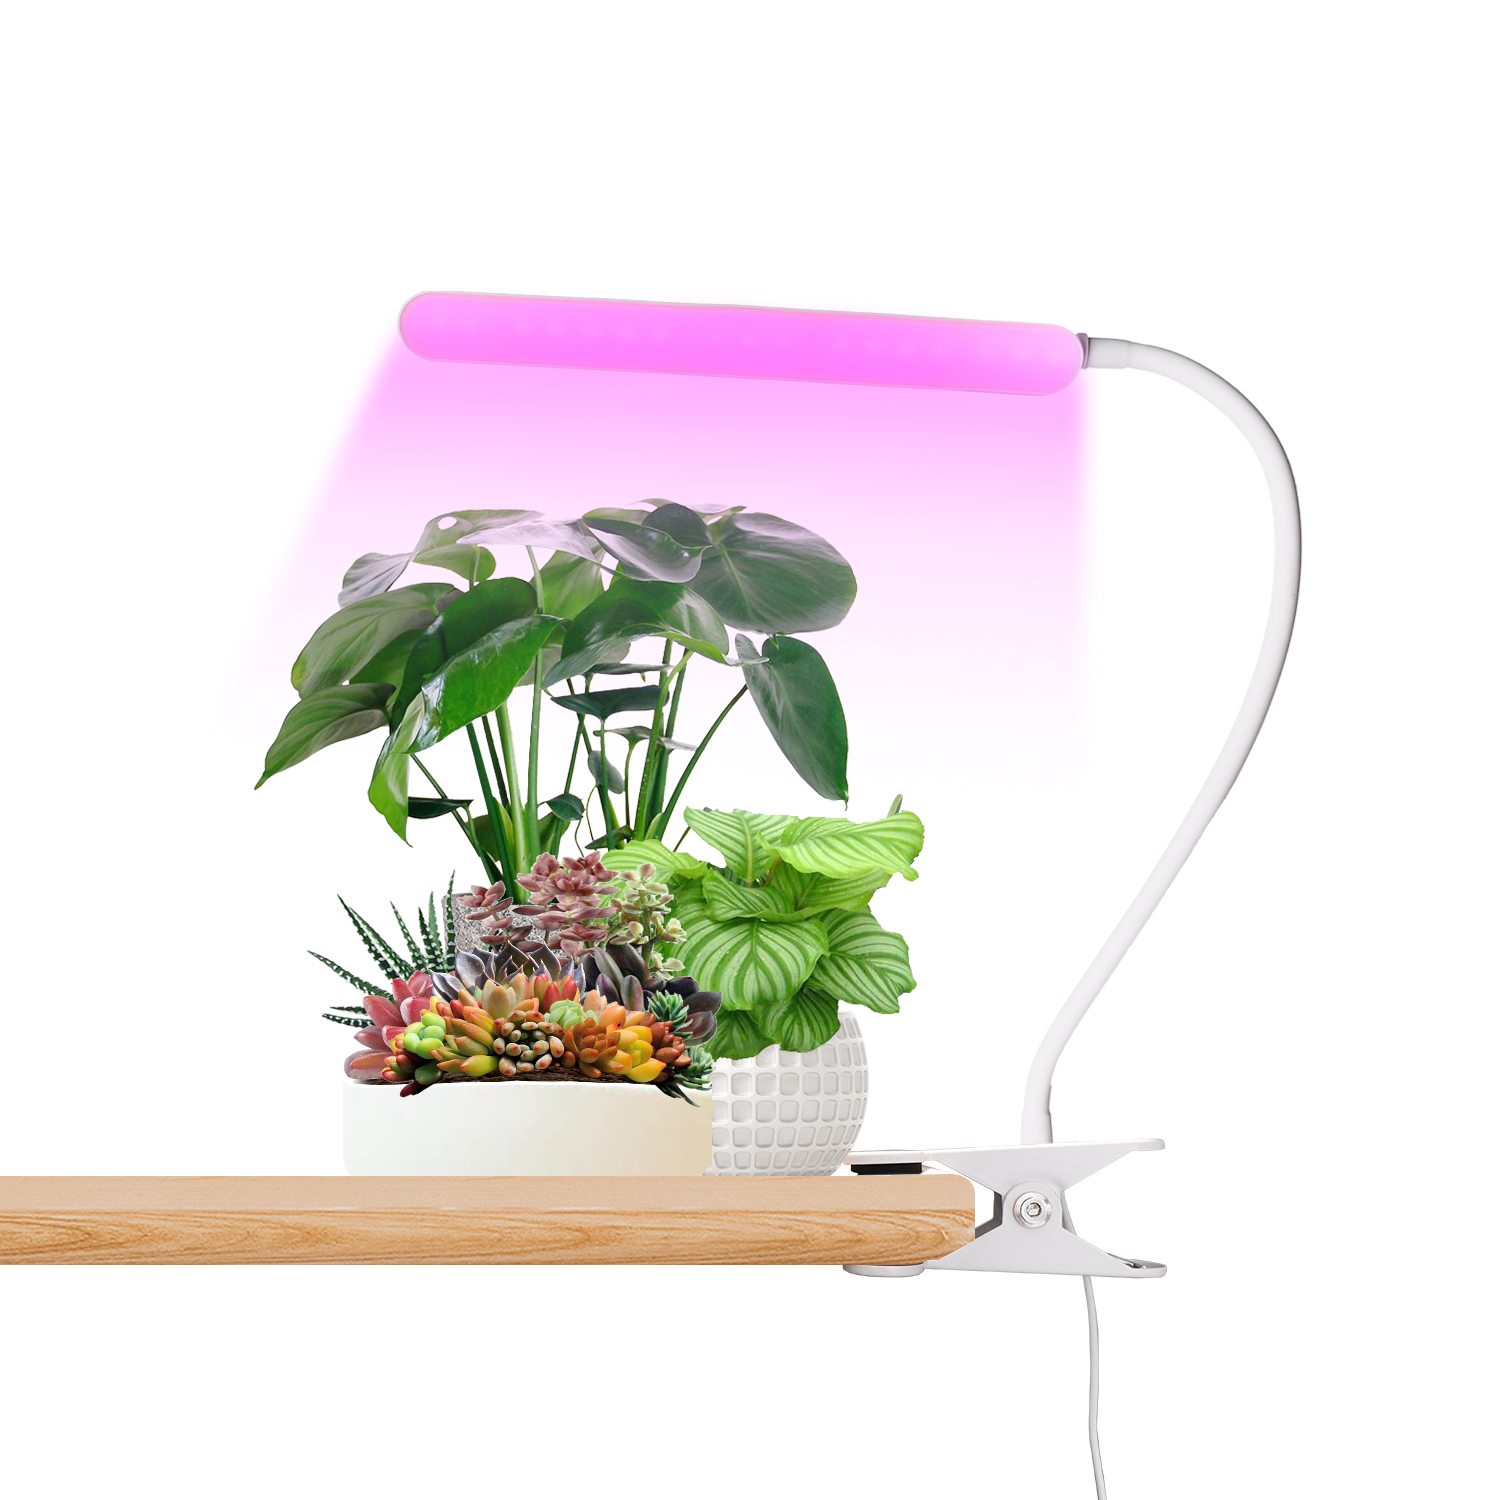 TG201 Led Indoor Garden Plant Lights for Winter Best Grow Lights Plant Growing Kit